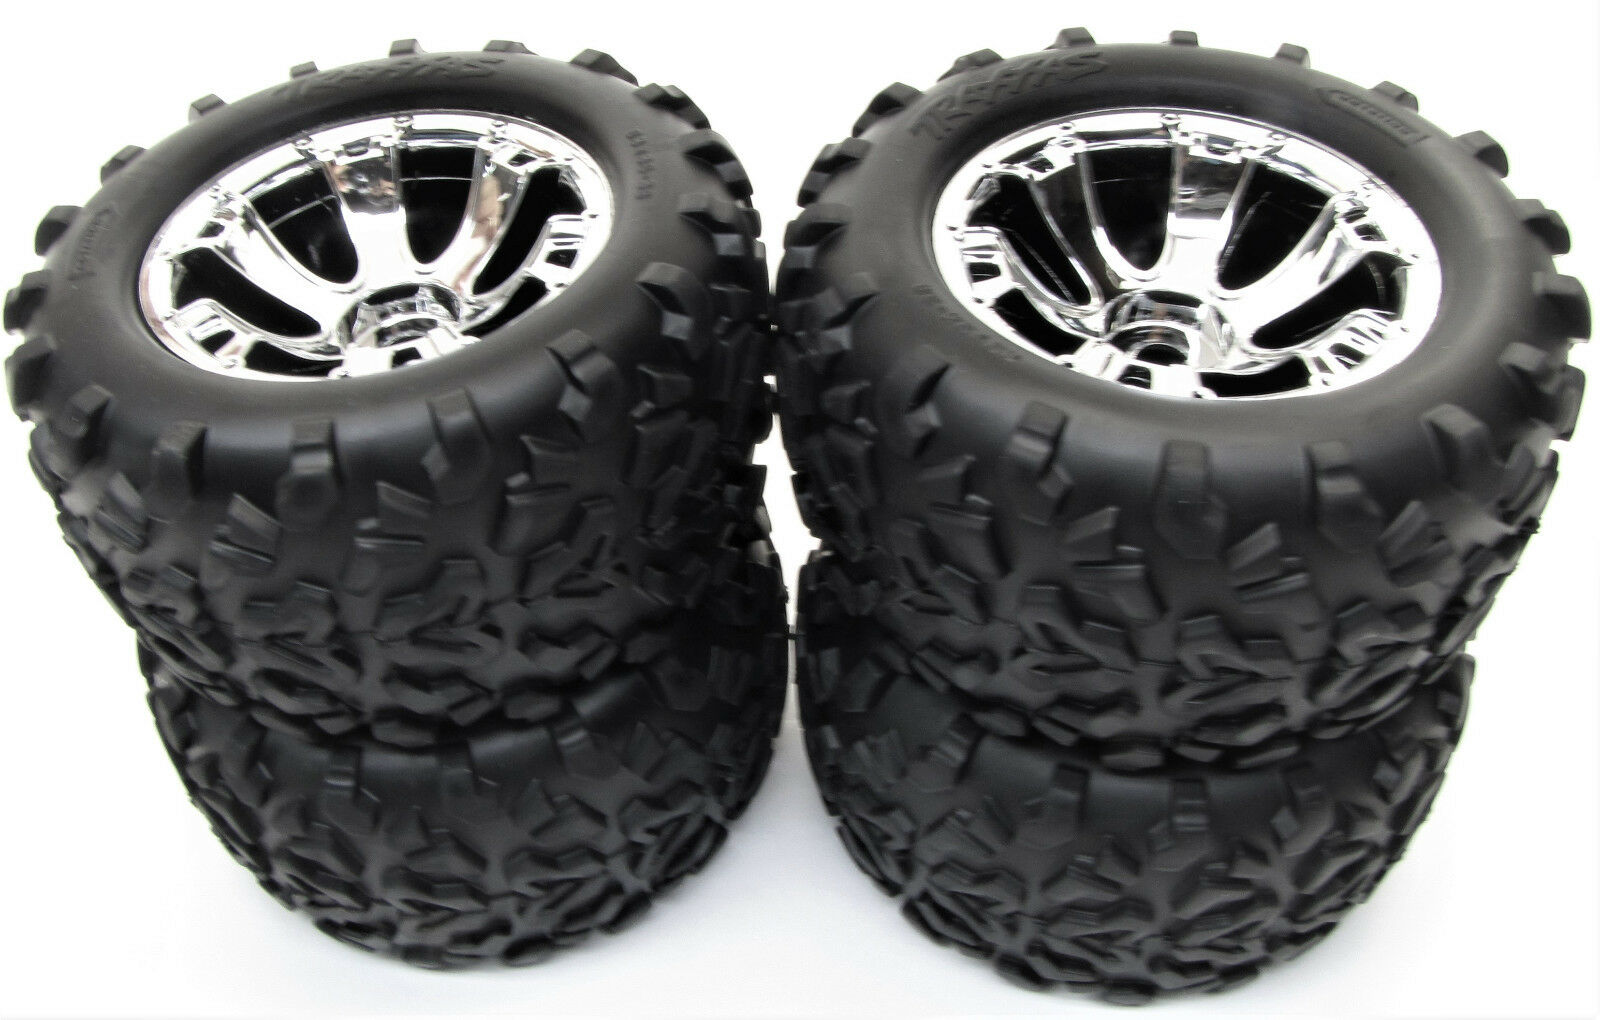 Nitro Revo 6.3" Maxx Tires & Geode Wheels (factory Glued 17mm 53097-3 Traxxas